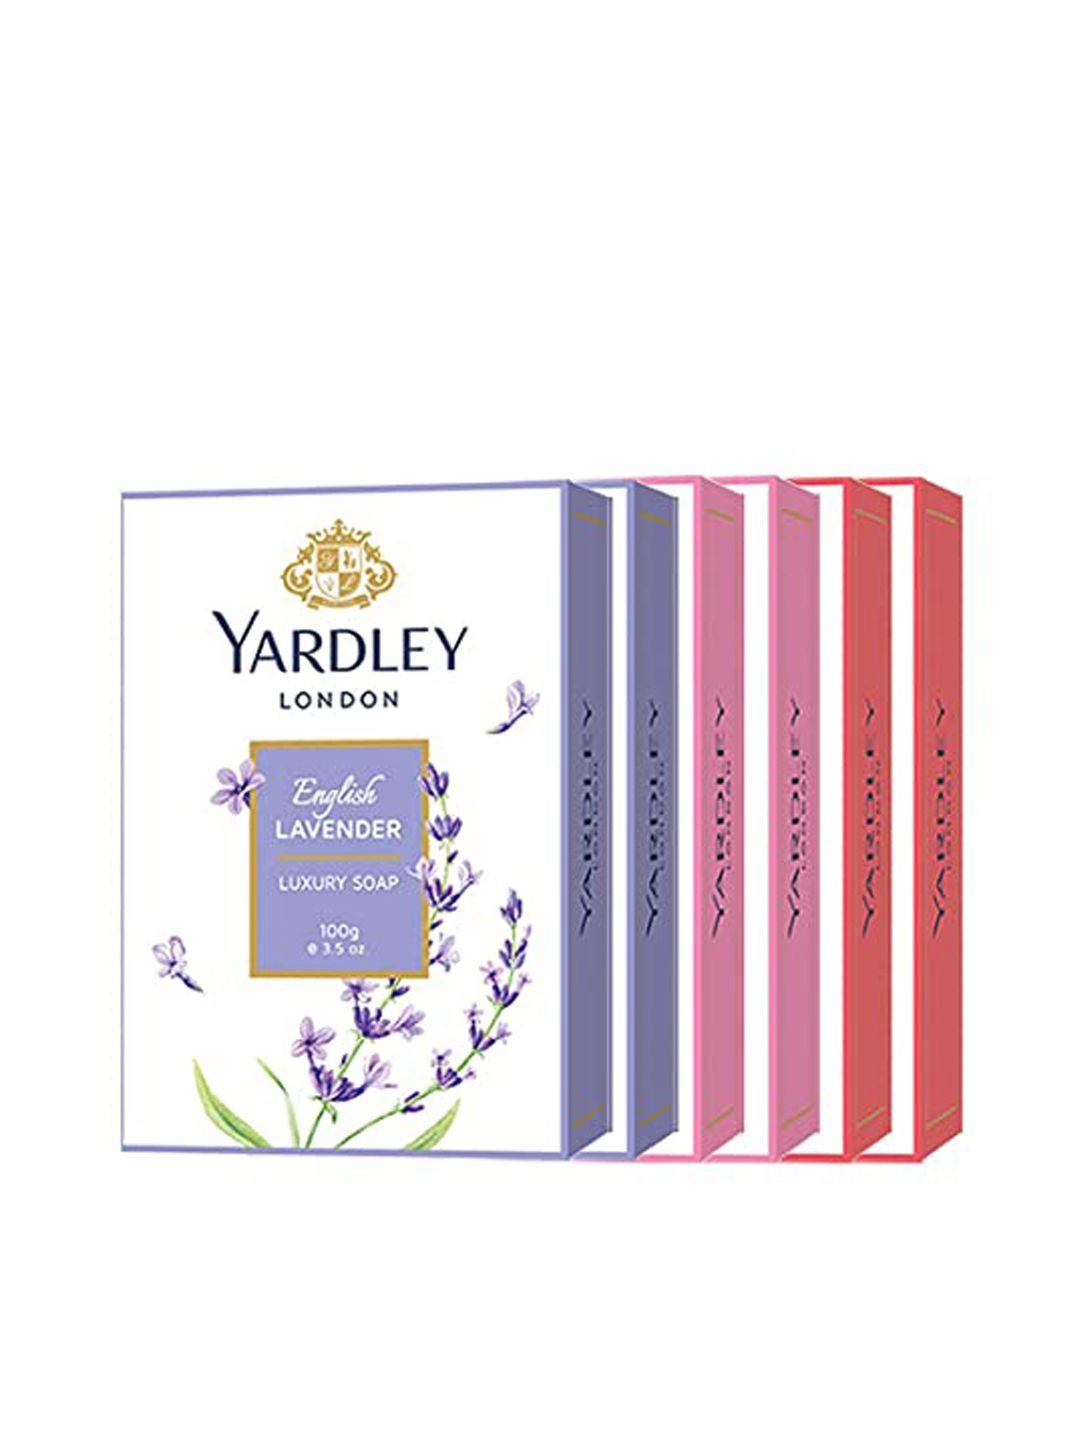 yardley london set of 6 lavender-rose-red roses luxury soaps - 100 g each